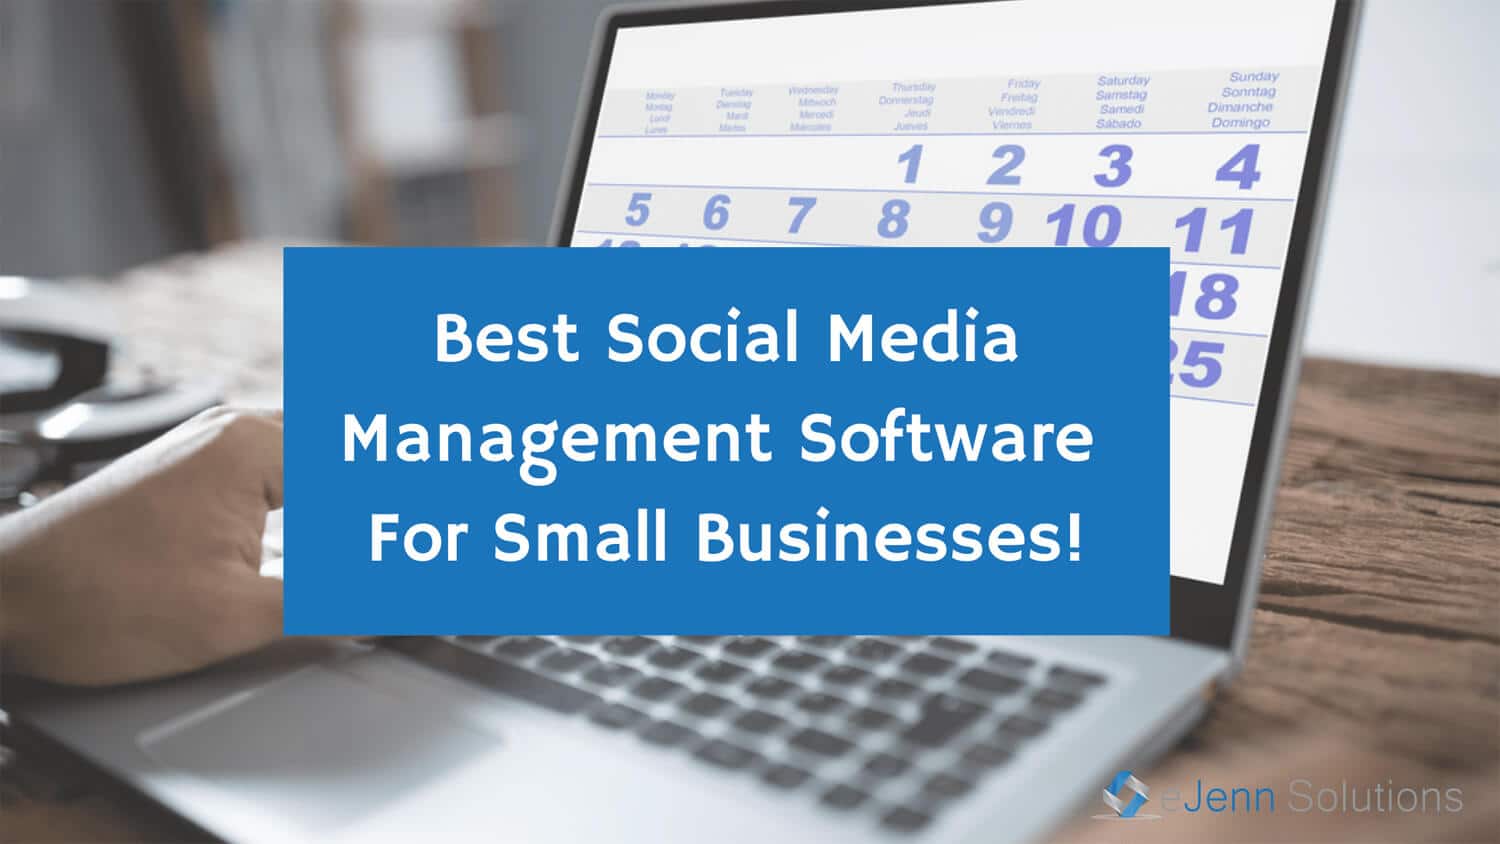 Blog-best-Social-Media-Management-Software-for-Small-Businesses-2021